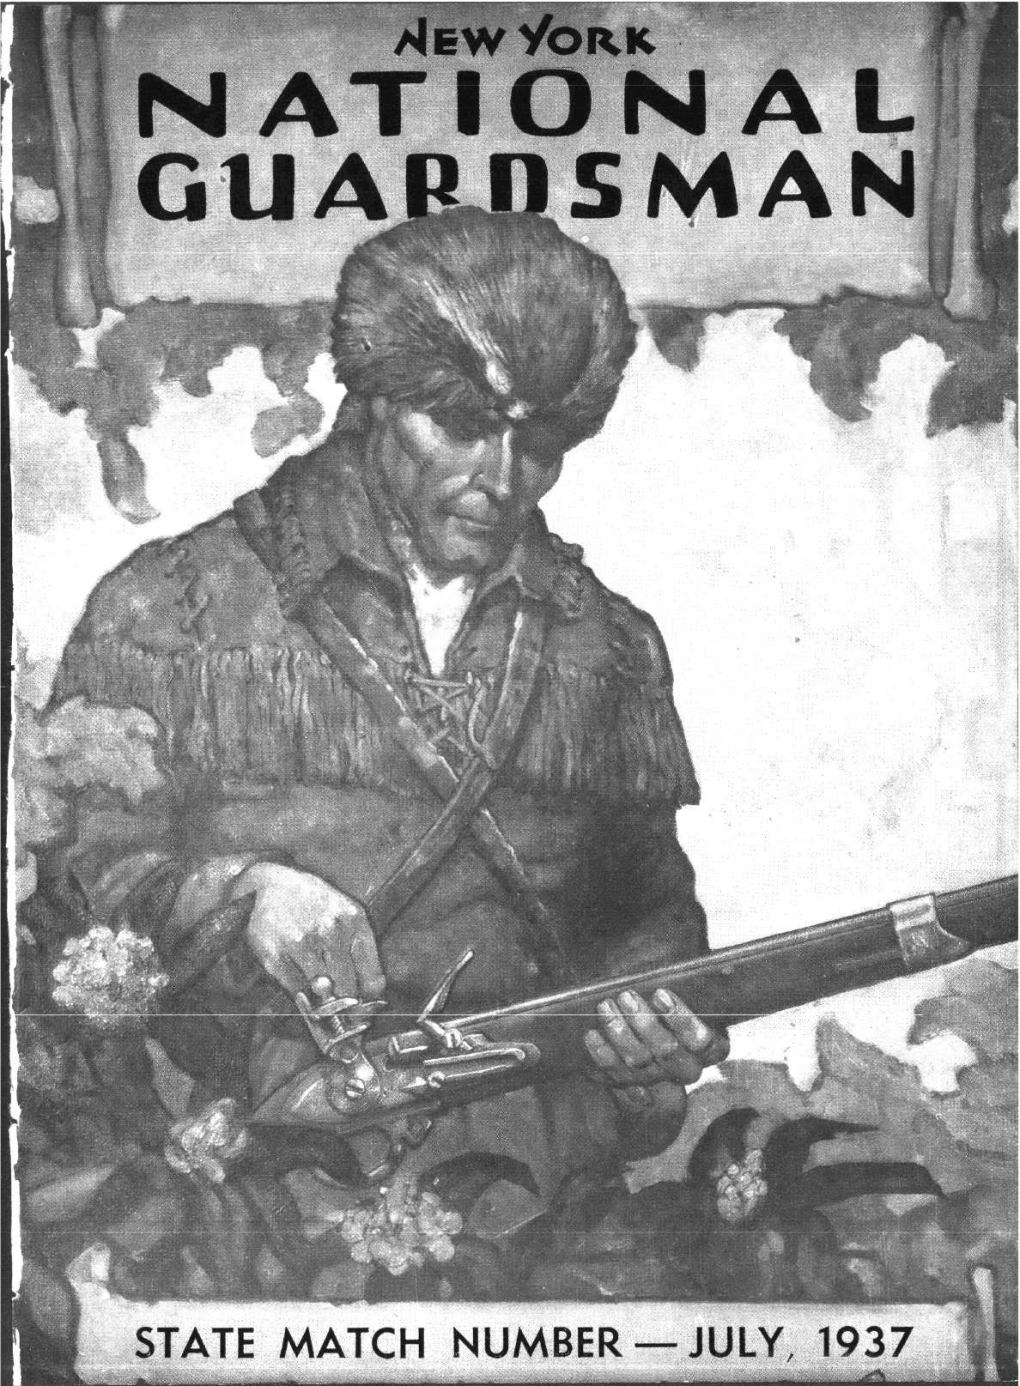 1937 the New York National Guardsman